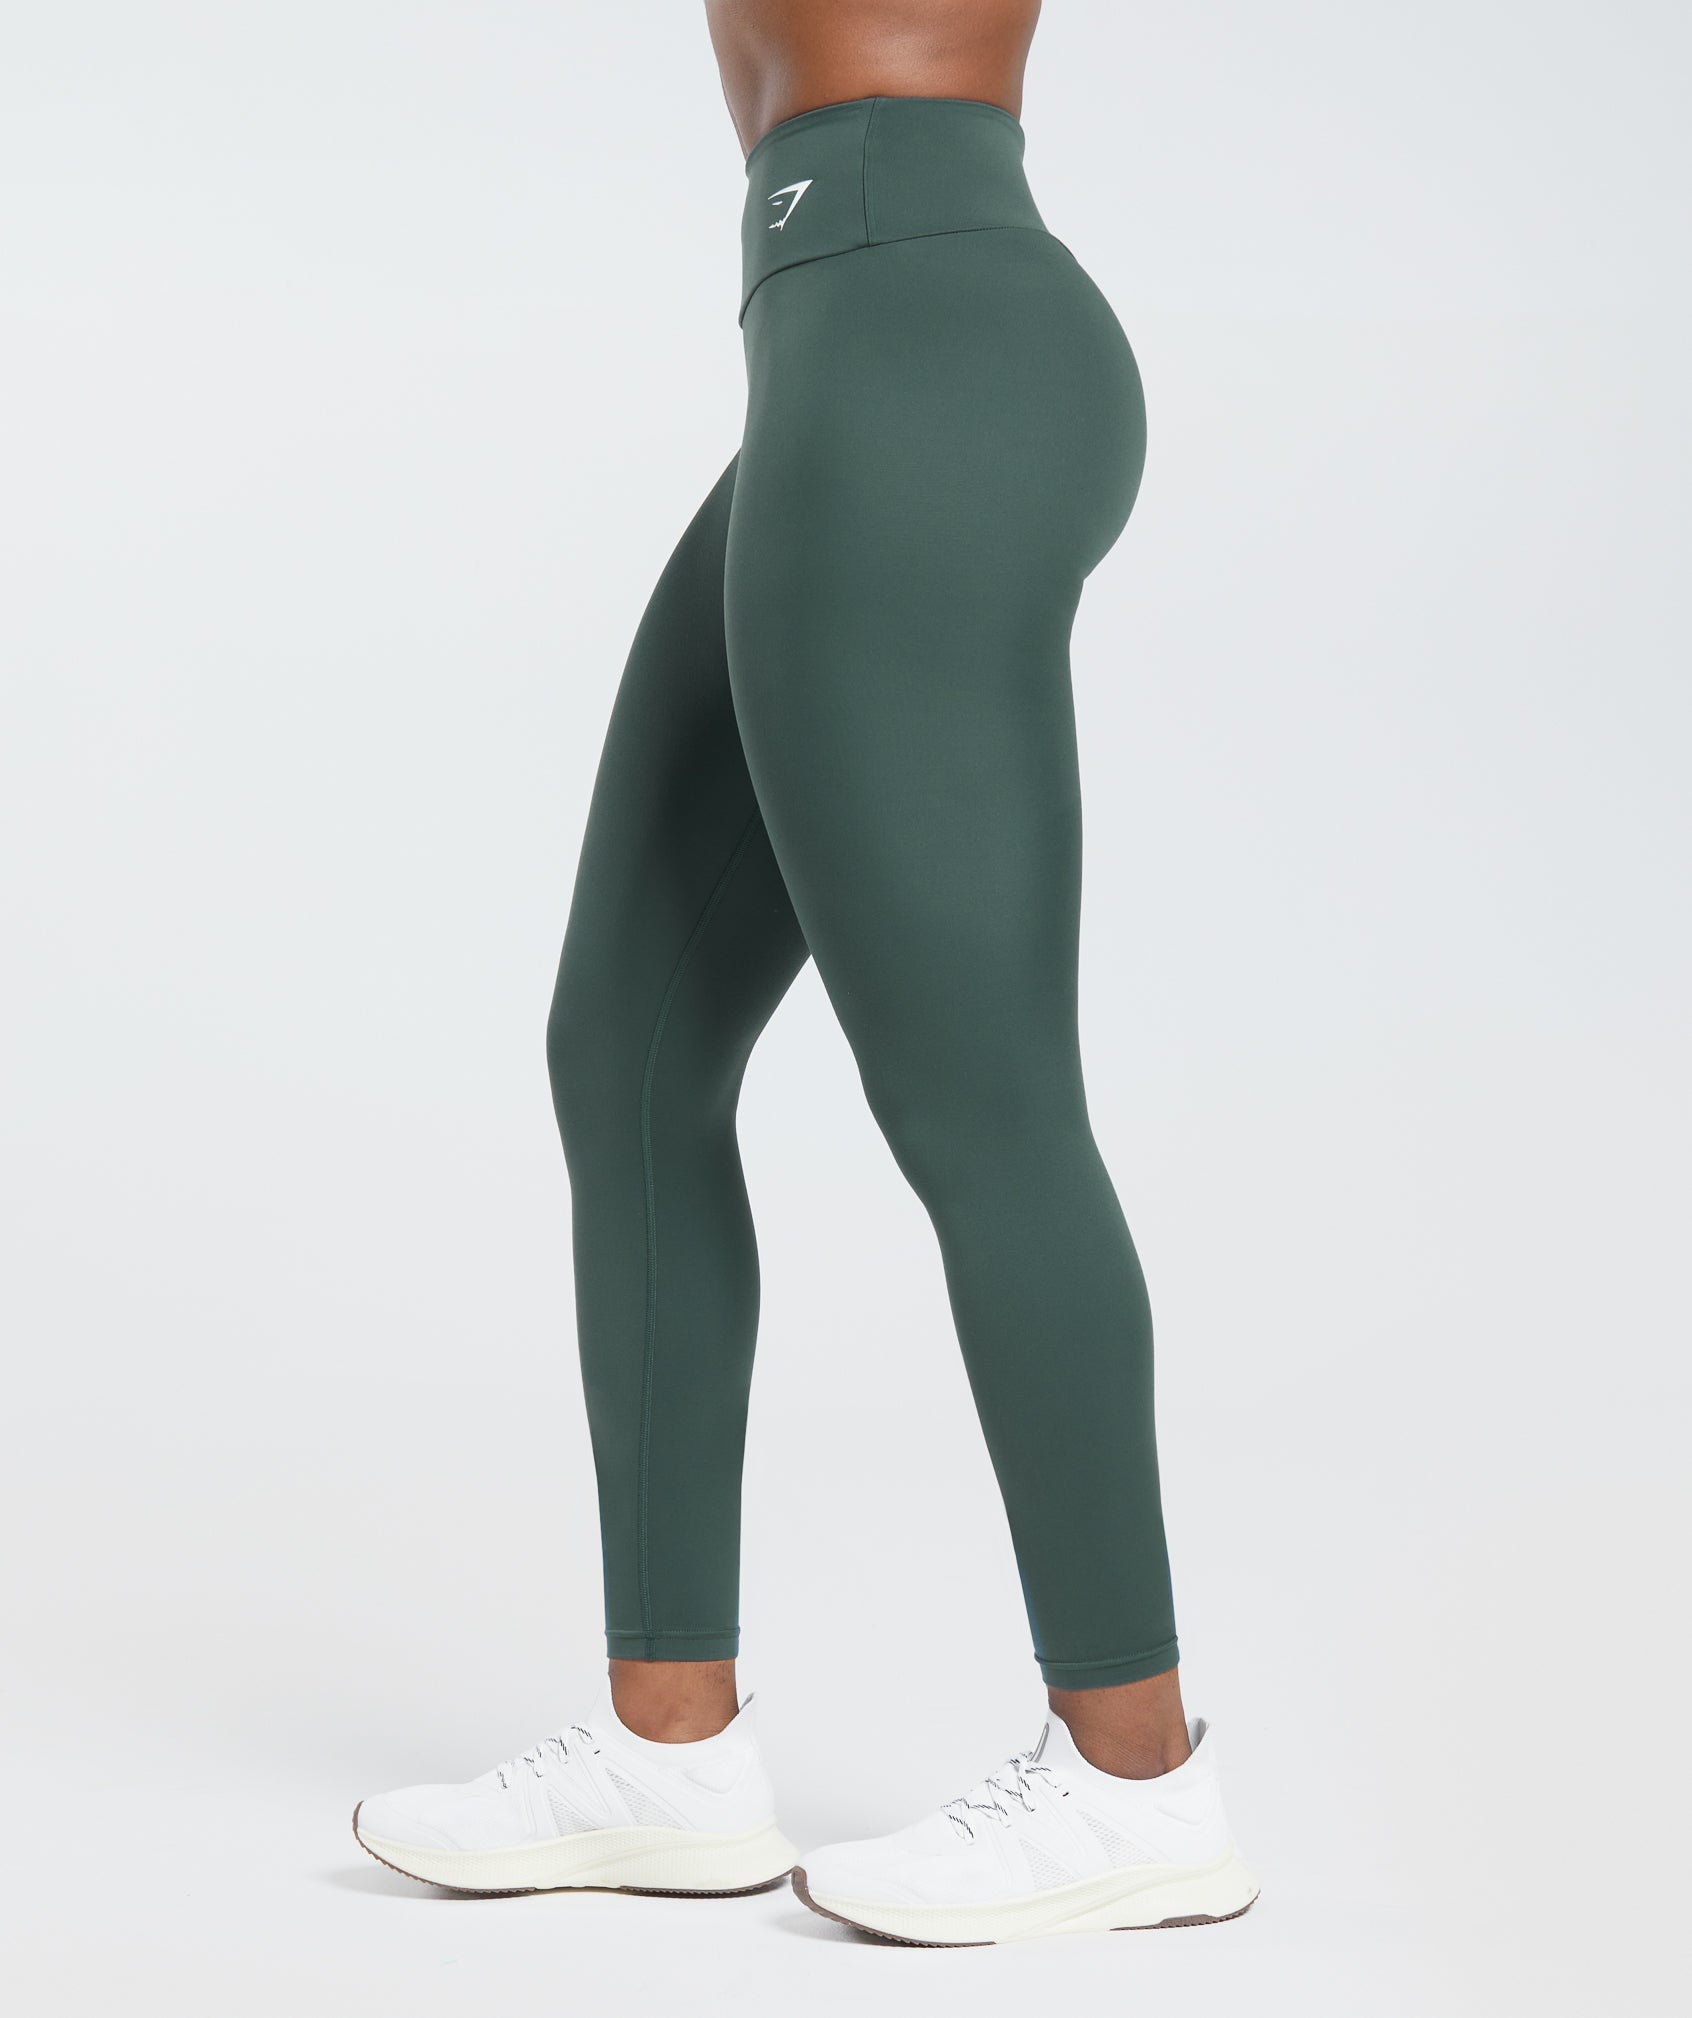 Gymshark Flex Leggings Green Size XS - $27 - From lauren